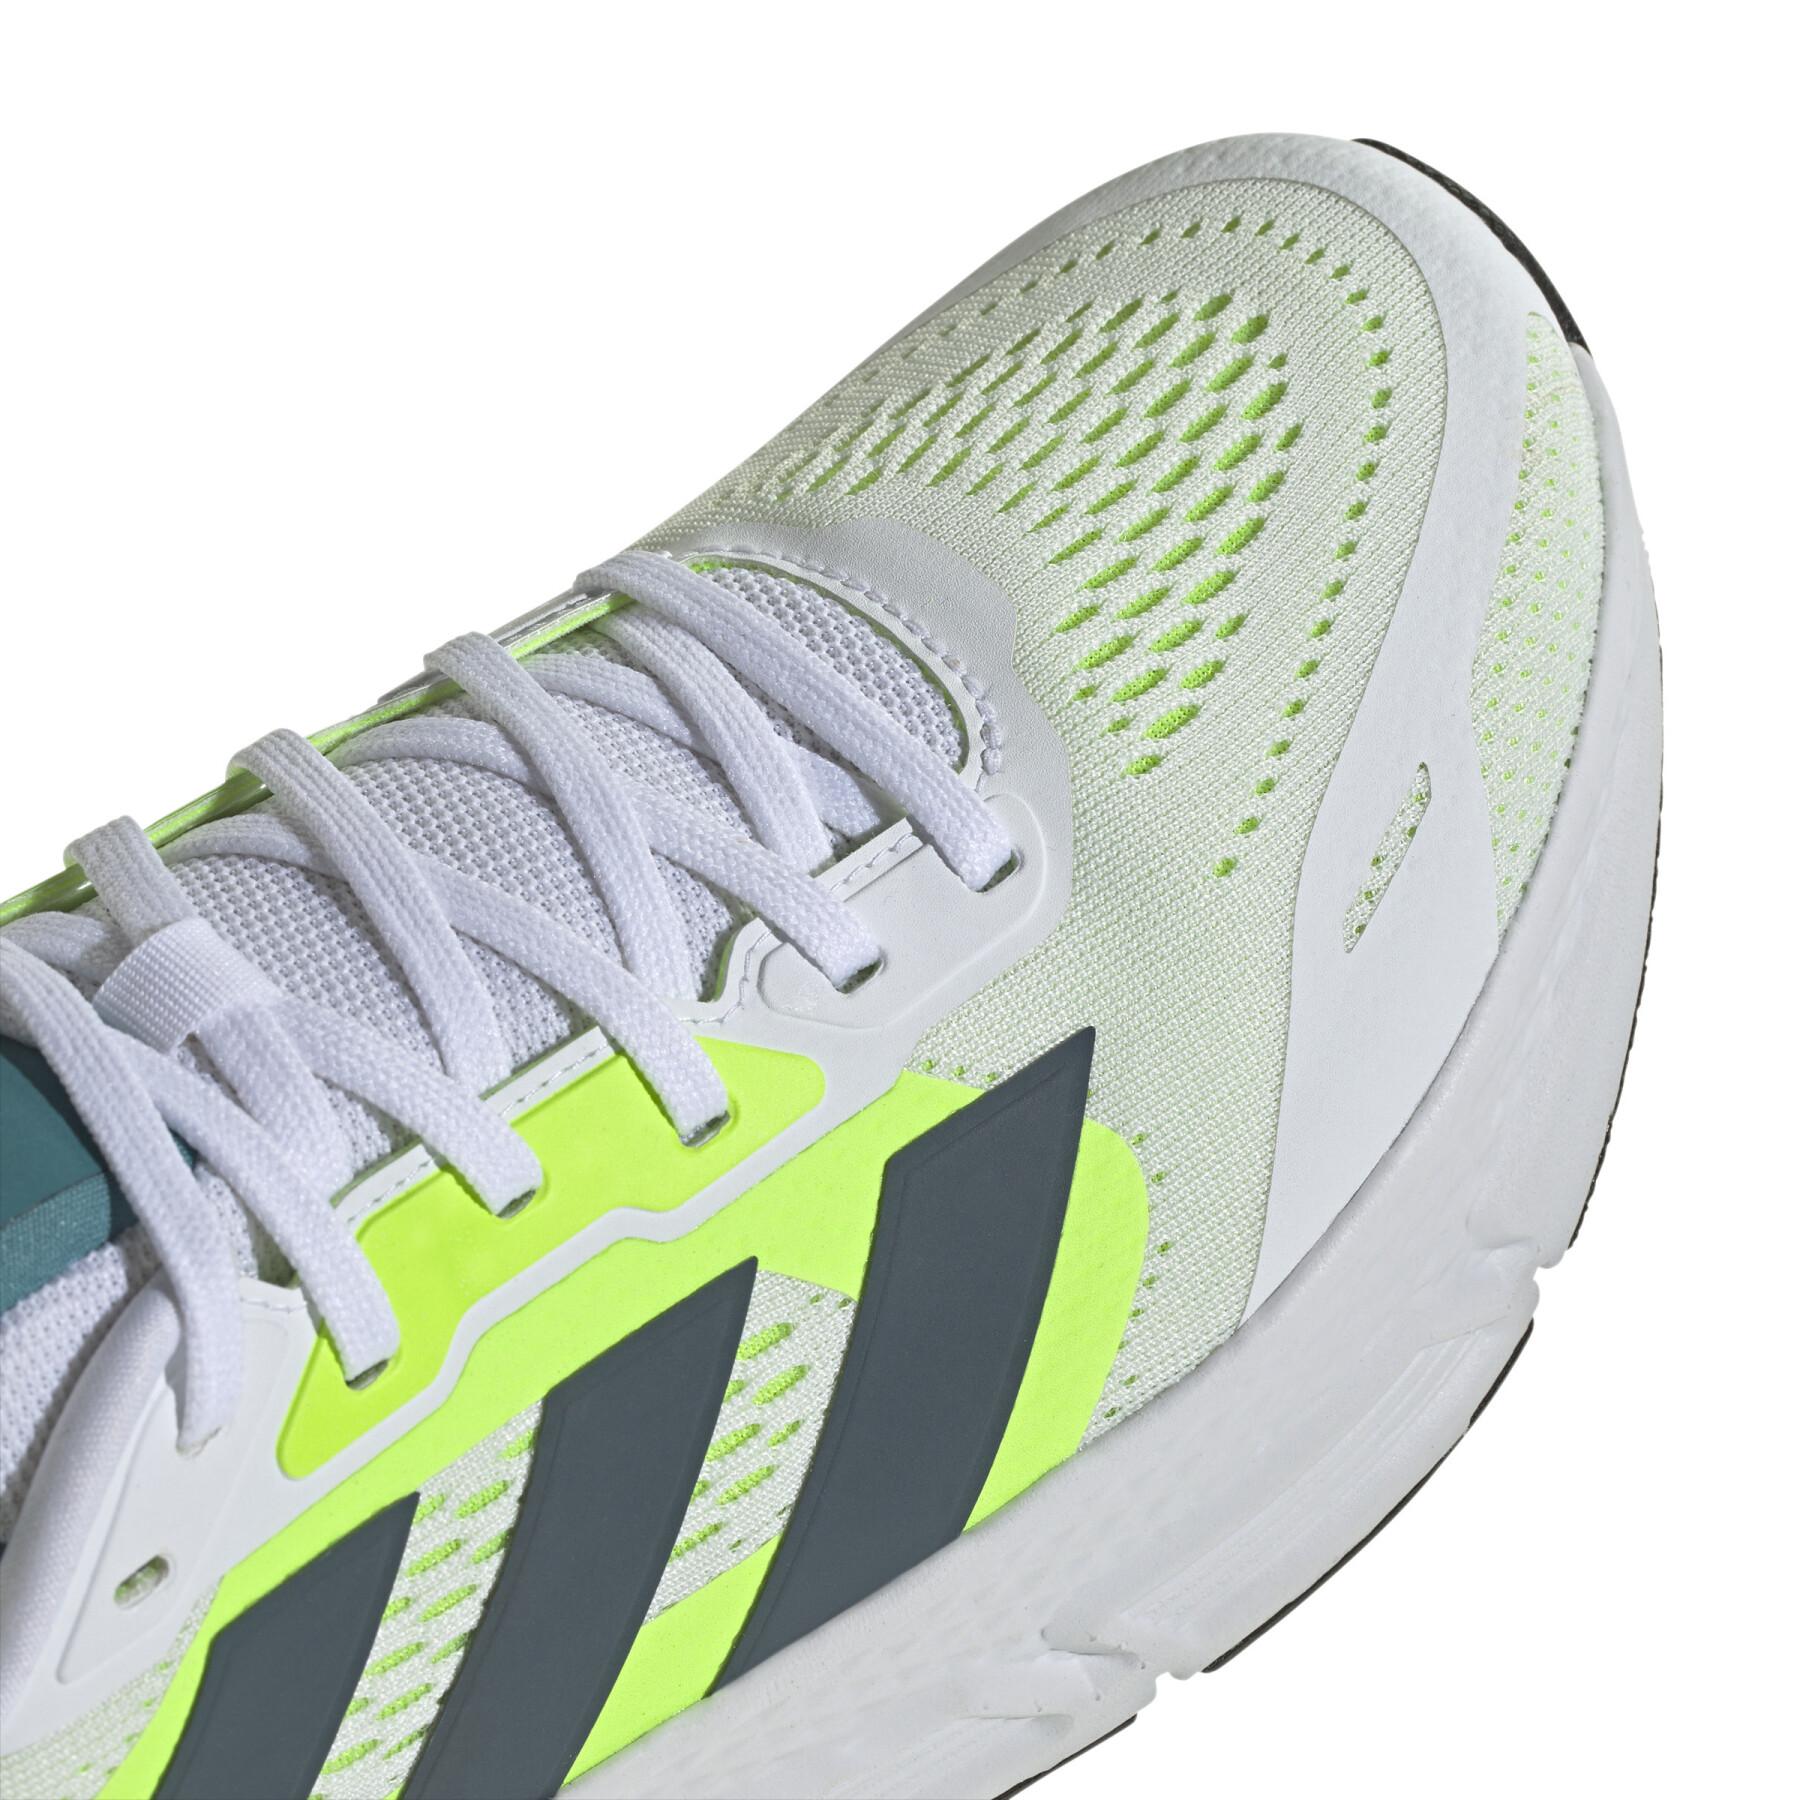 Running shoes adidas Questar 2 Bounce